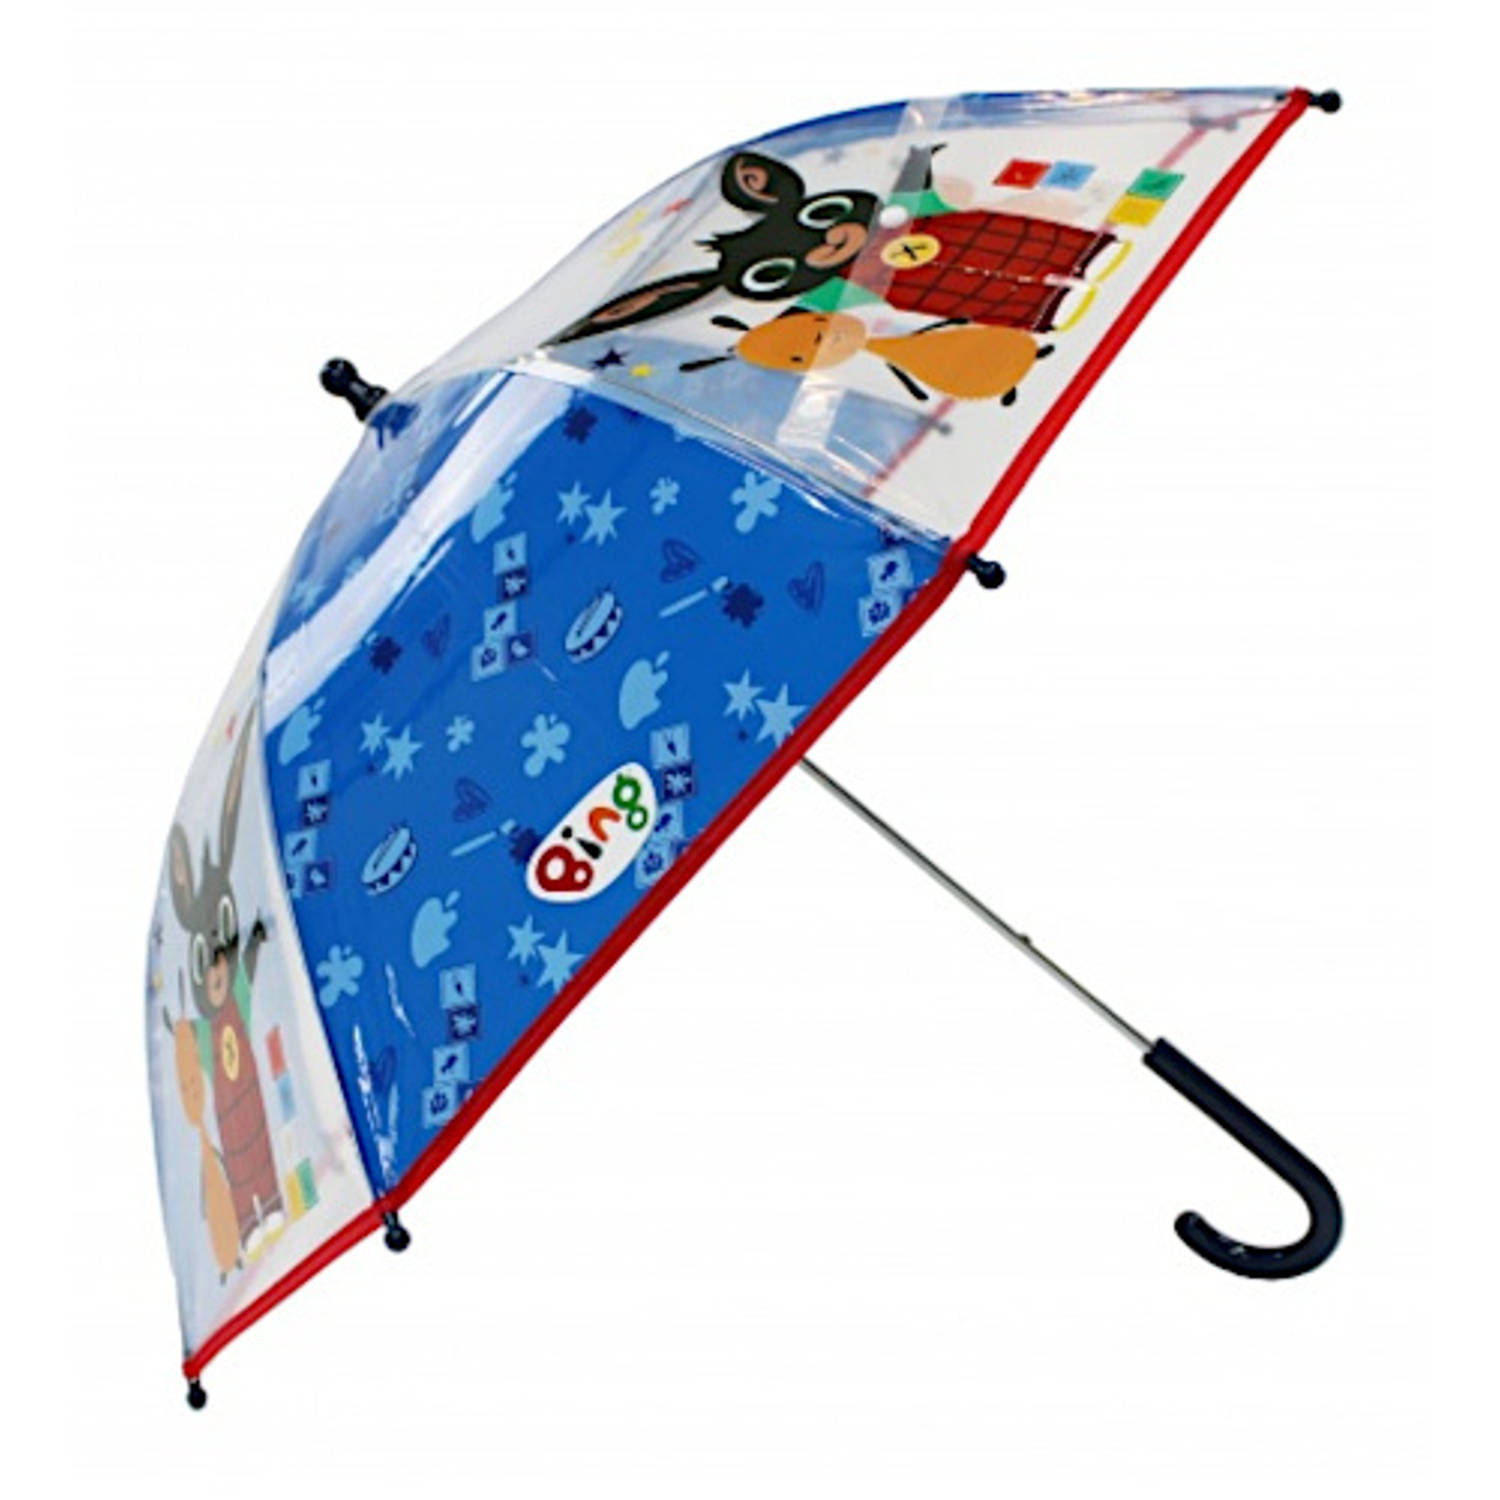 Merkloos Bing Paraplu Rainy Days Junior 73 Cm Pvc Blauw online kopen